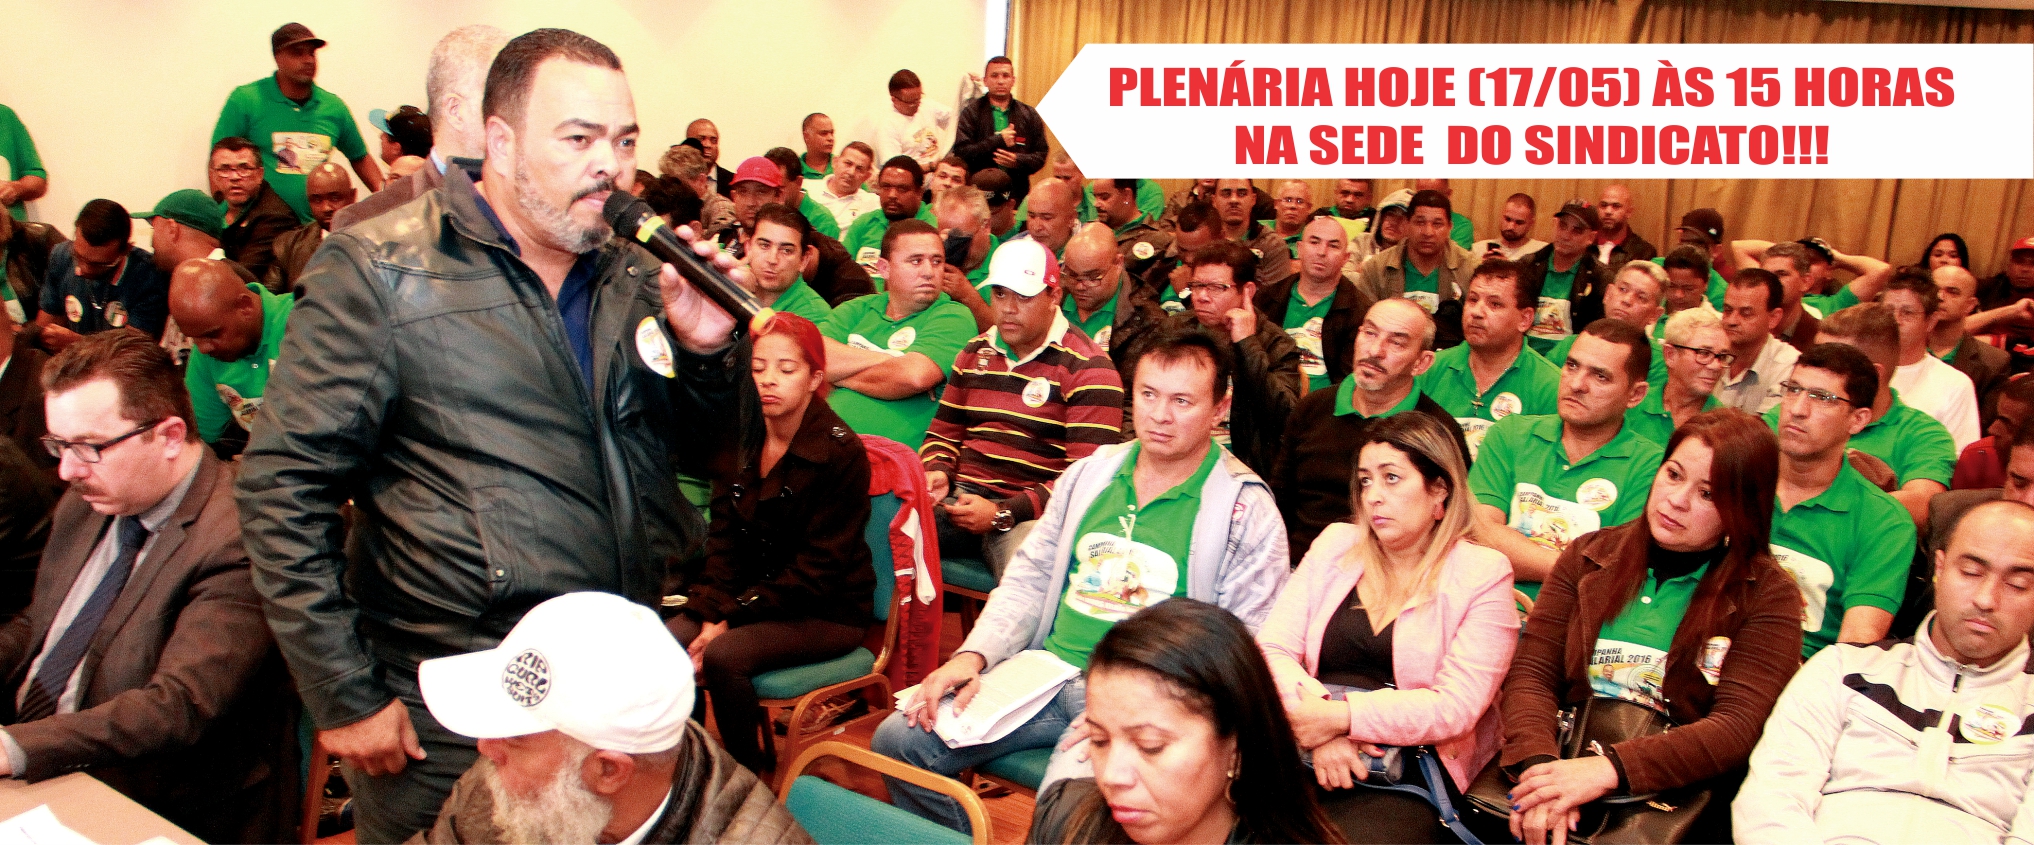 Patrões apresentam proposta salarial VERGONHOSA!!!